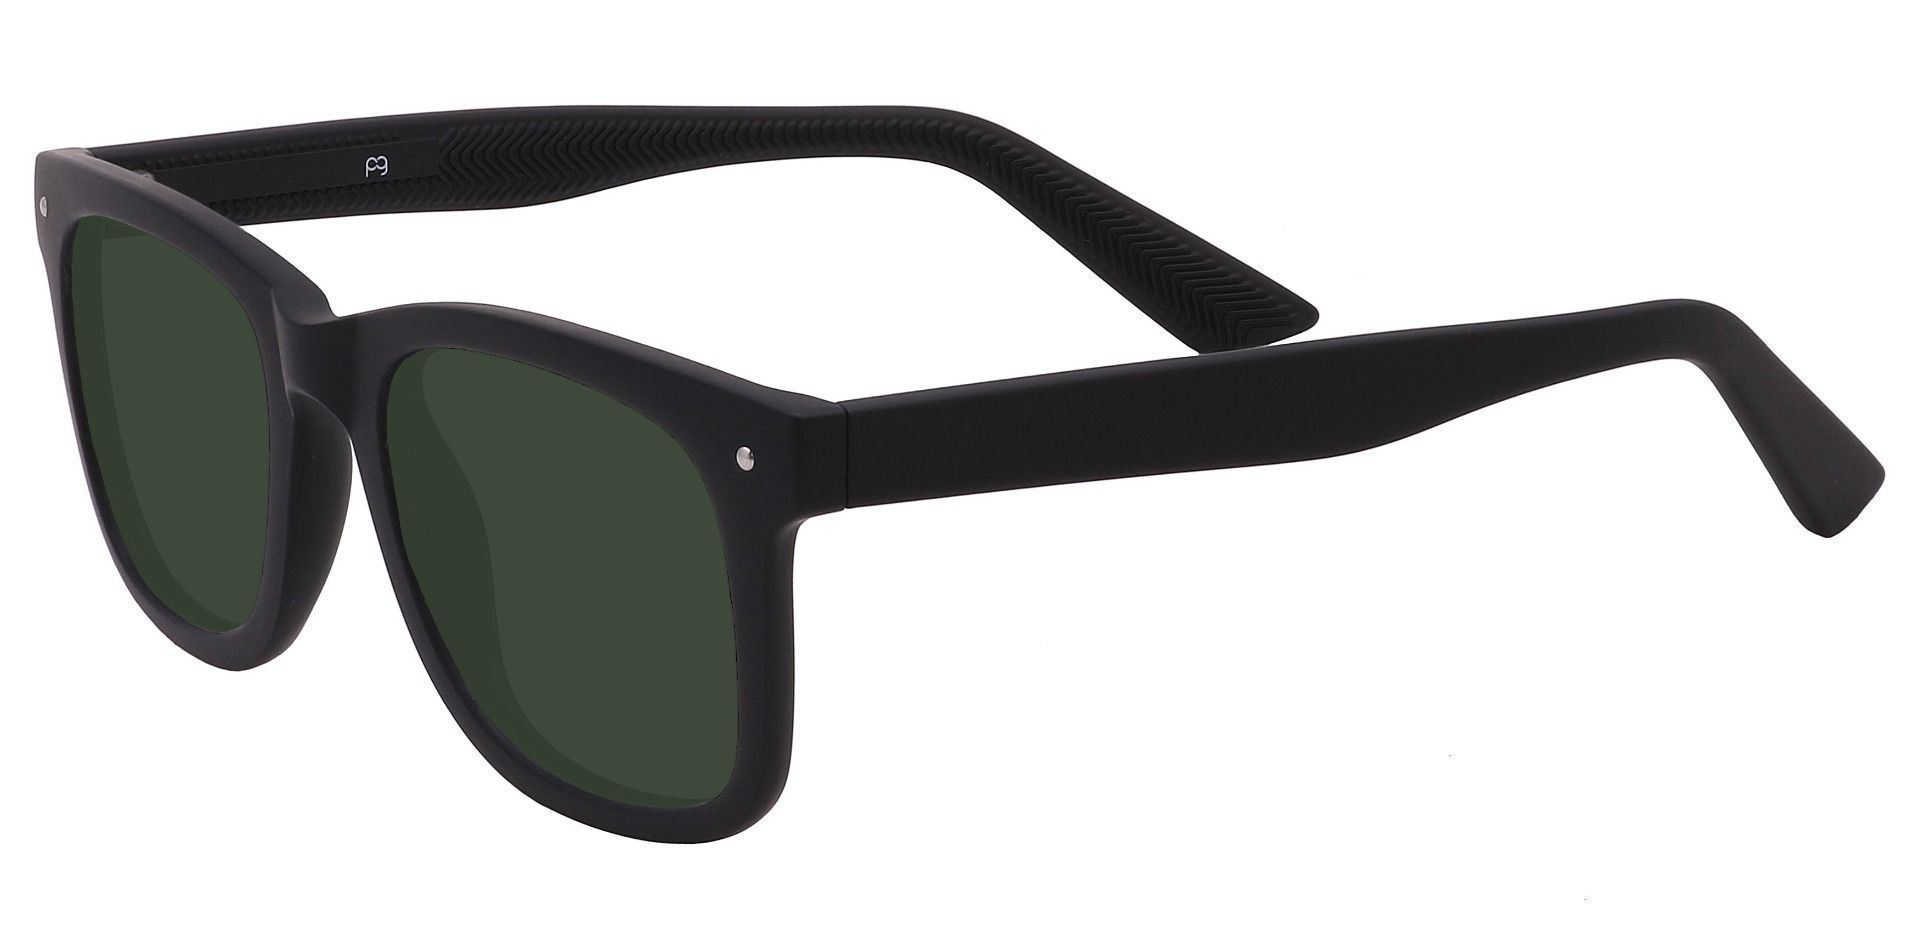 McKinley Square Progressive Sunglasses - Black Frame With Green Lenses